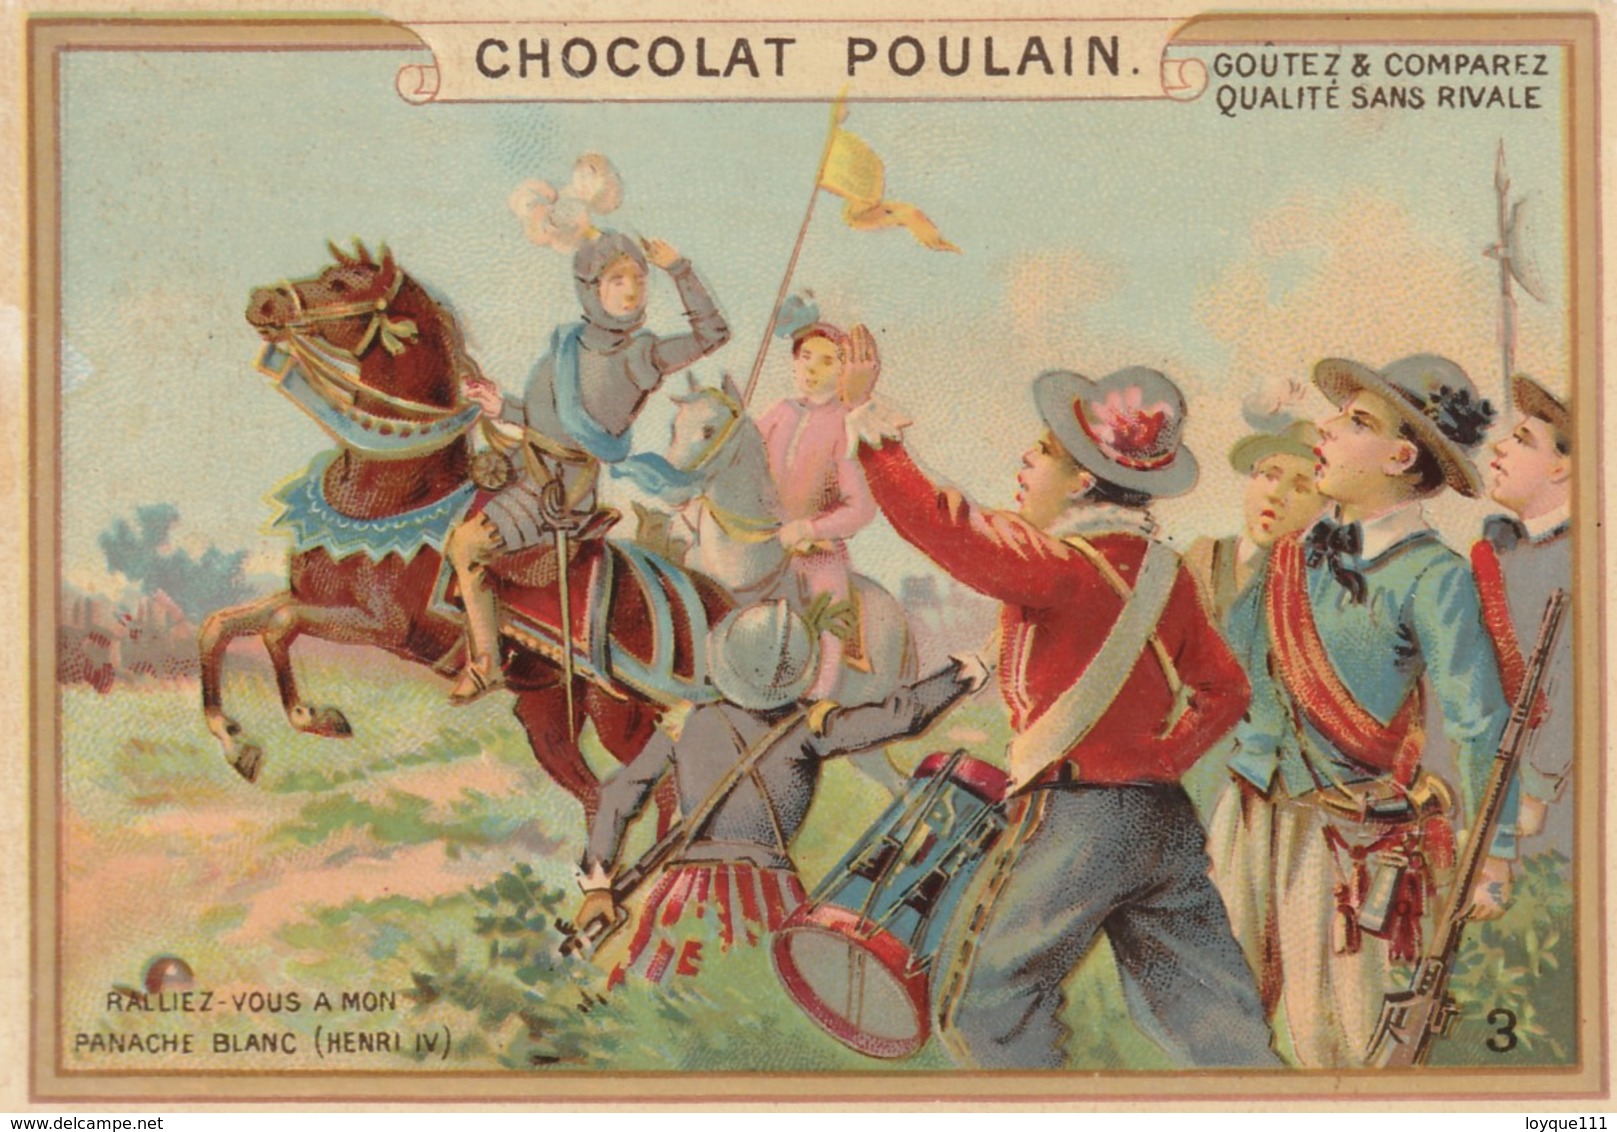 Chromo Poulain. N°3 / Ralliez Vous A Mon Panache Blanc - Chocolat